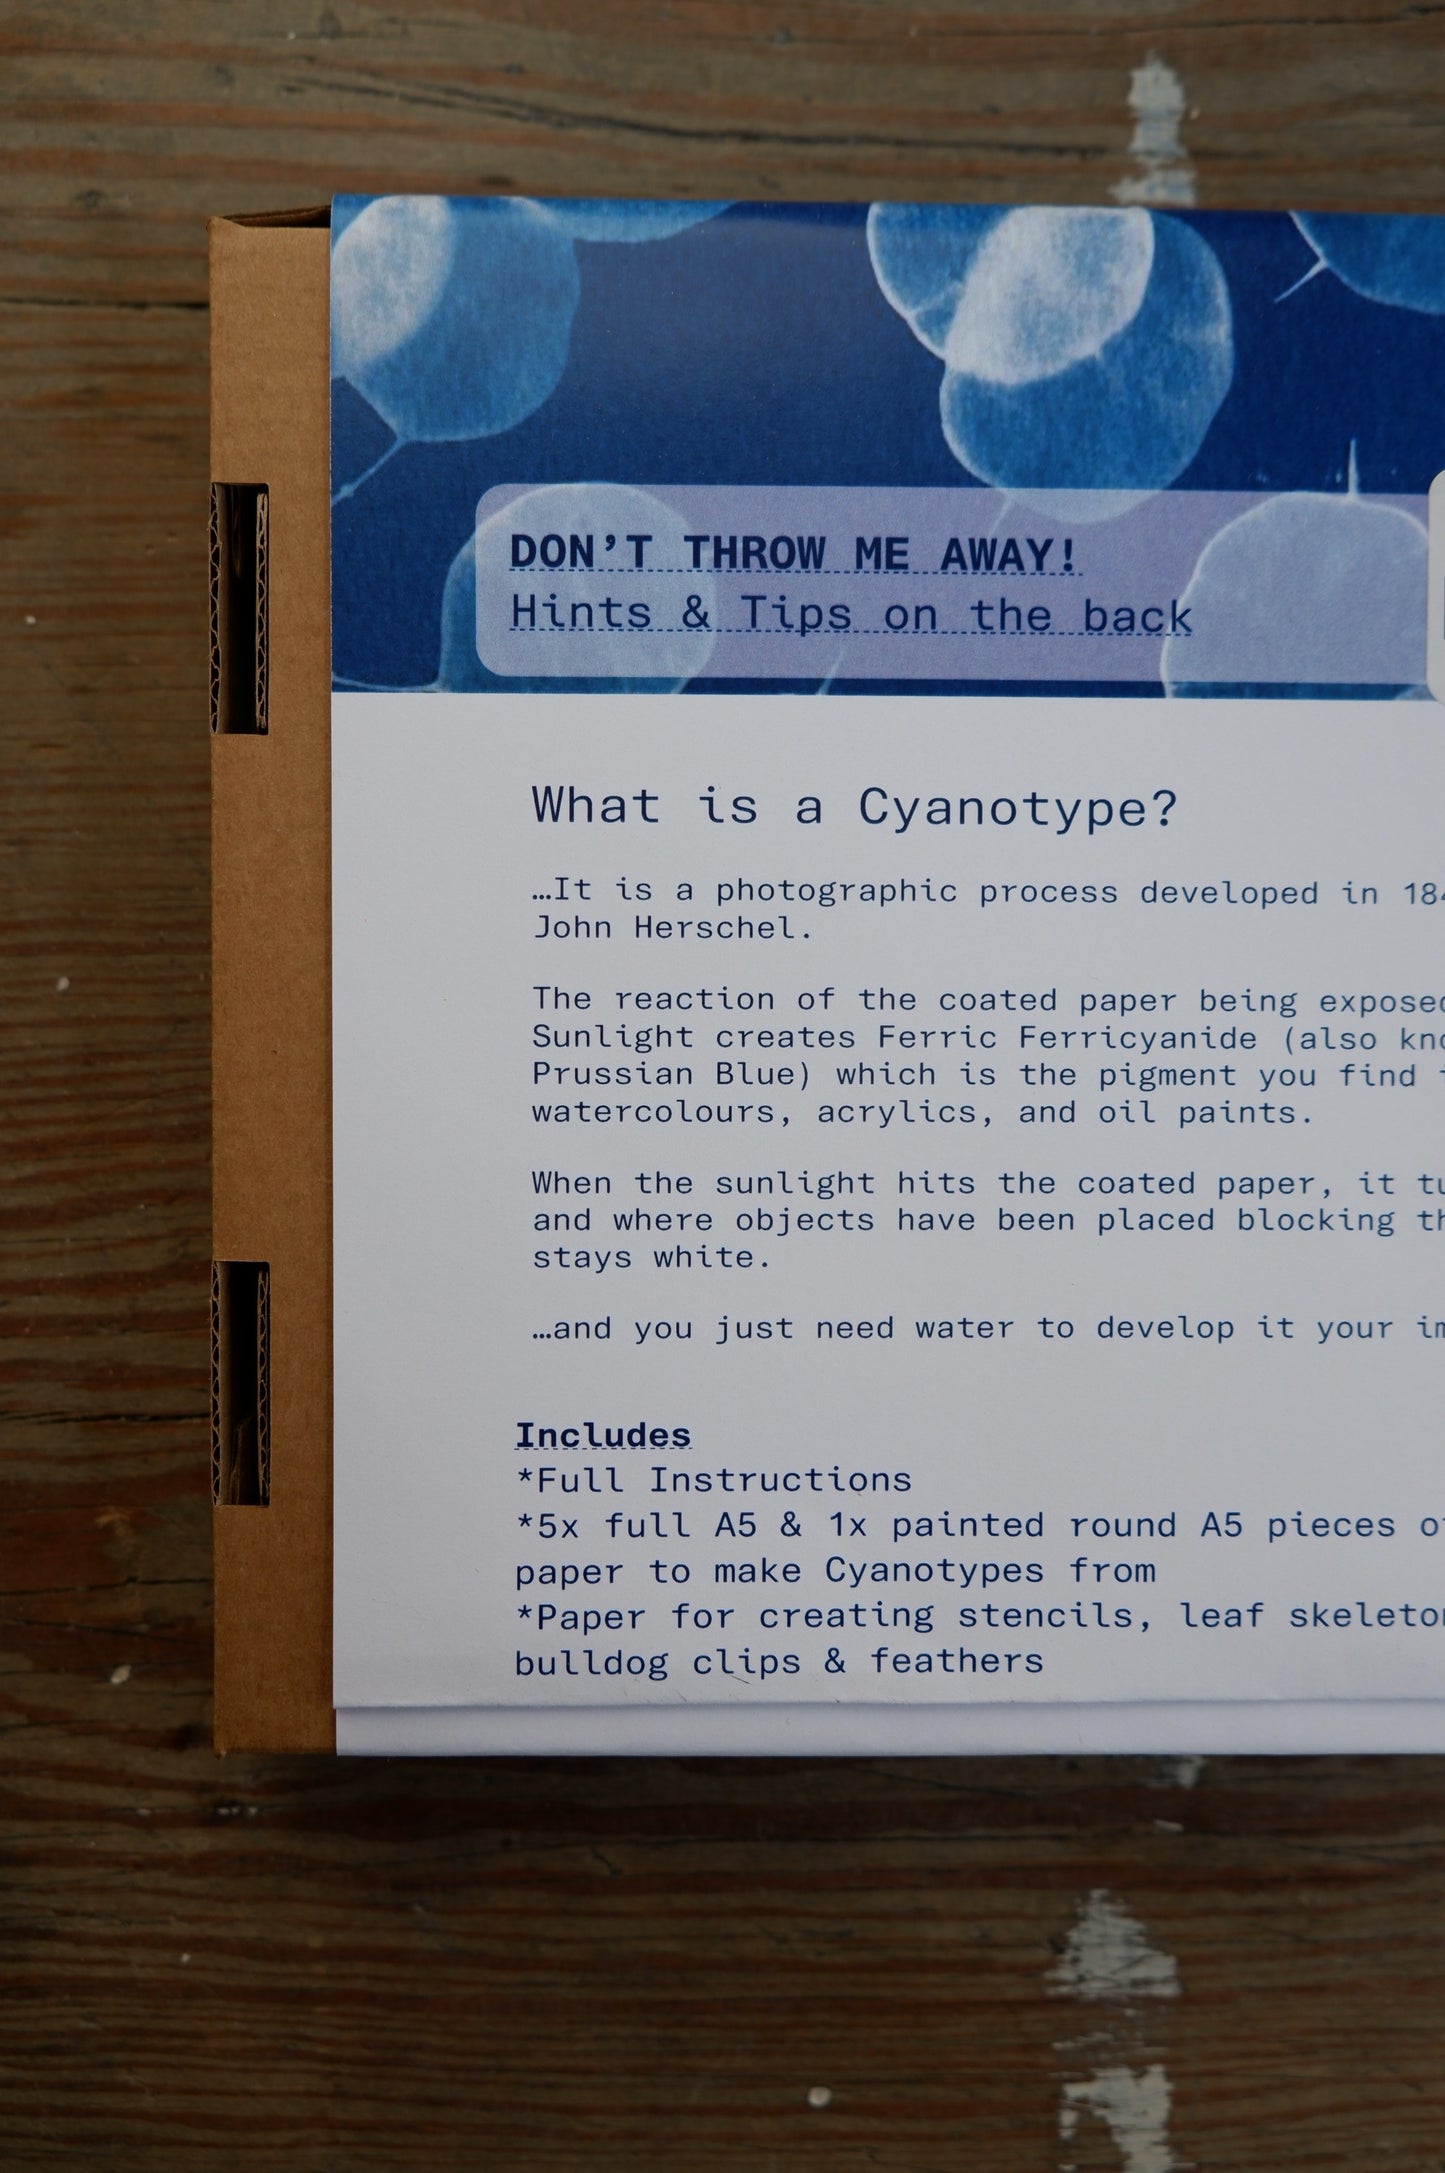 Cyanotype print Craft kit